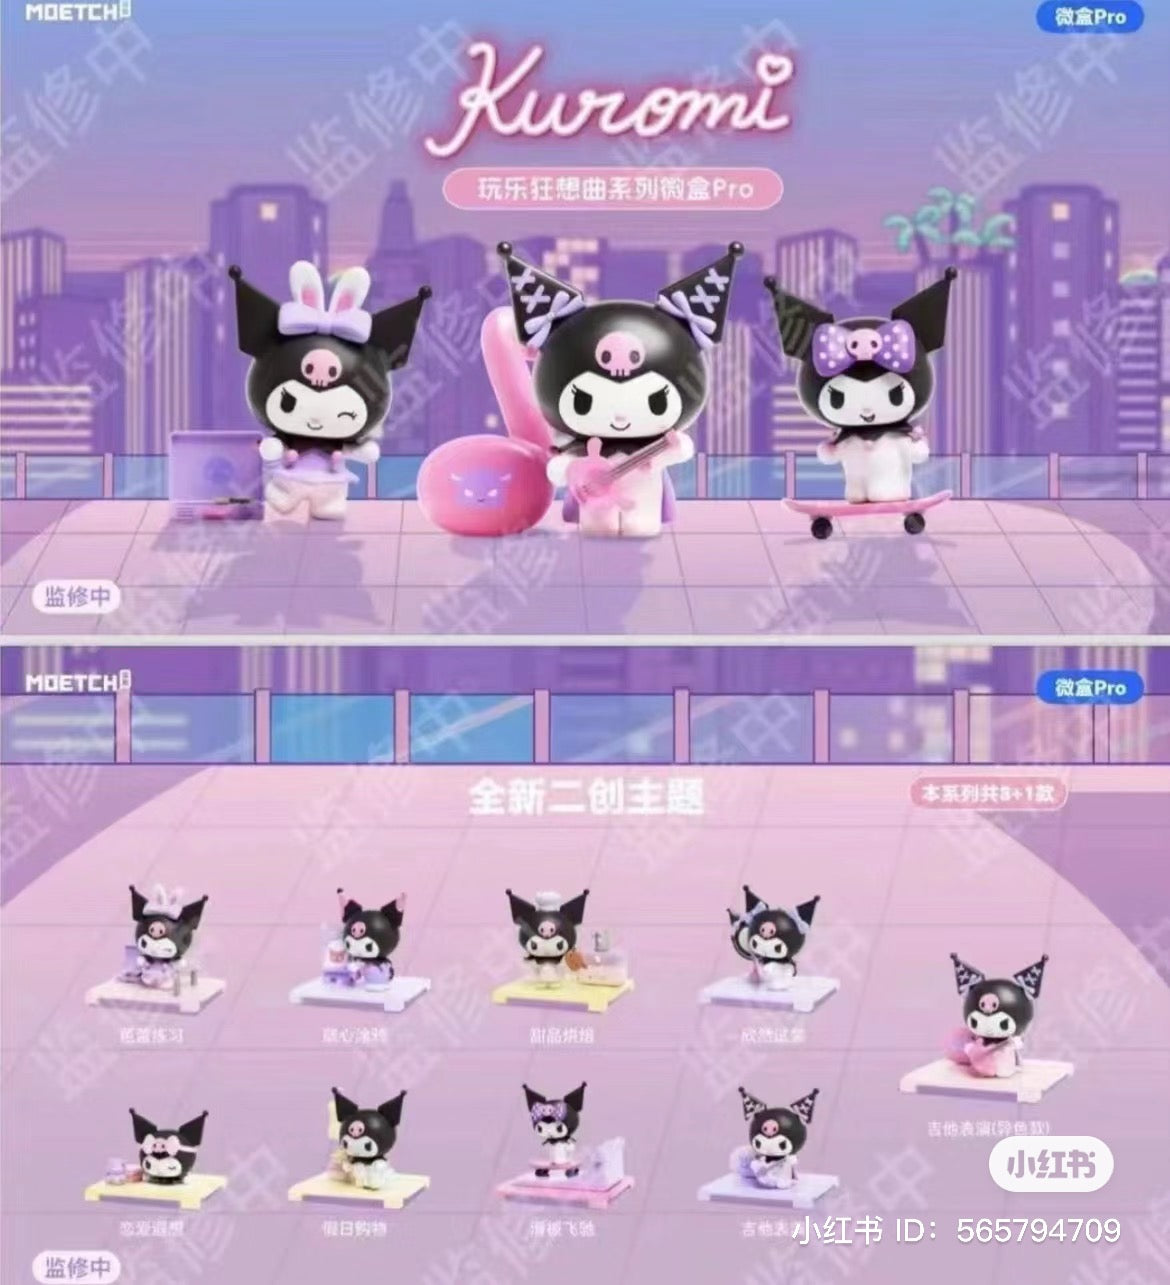 Alt text: Kuromi Fun Rhapsody Series Mini Box Pro Blind Box Series featuring various cartoon characters and small toys.